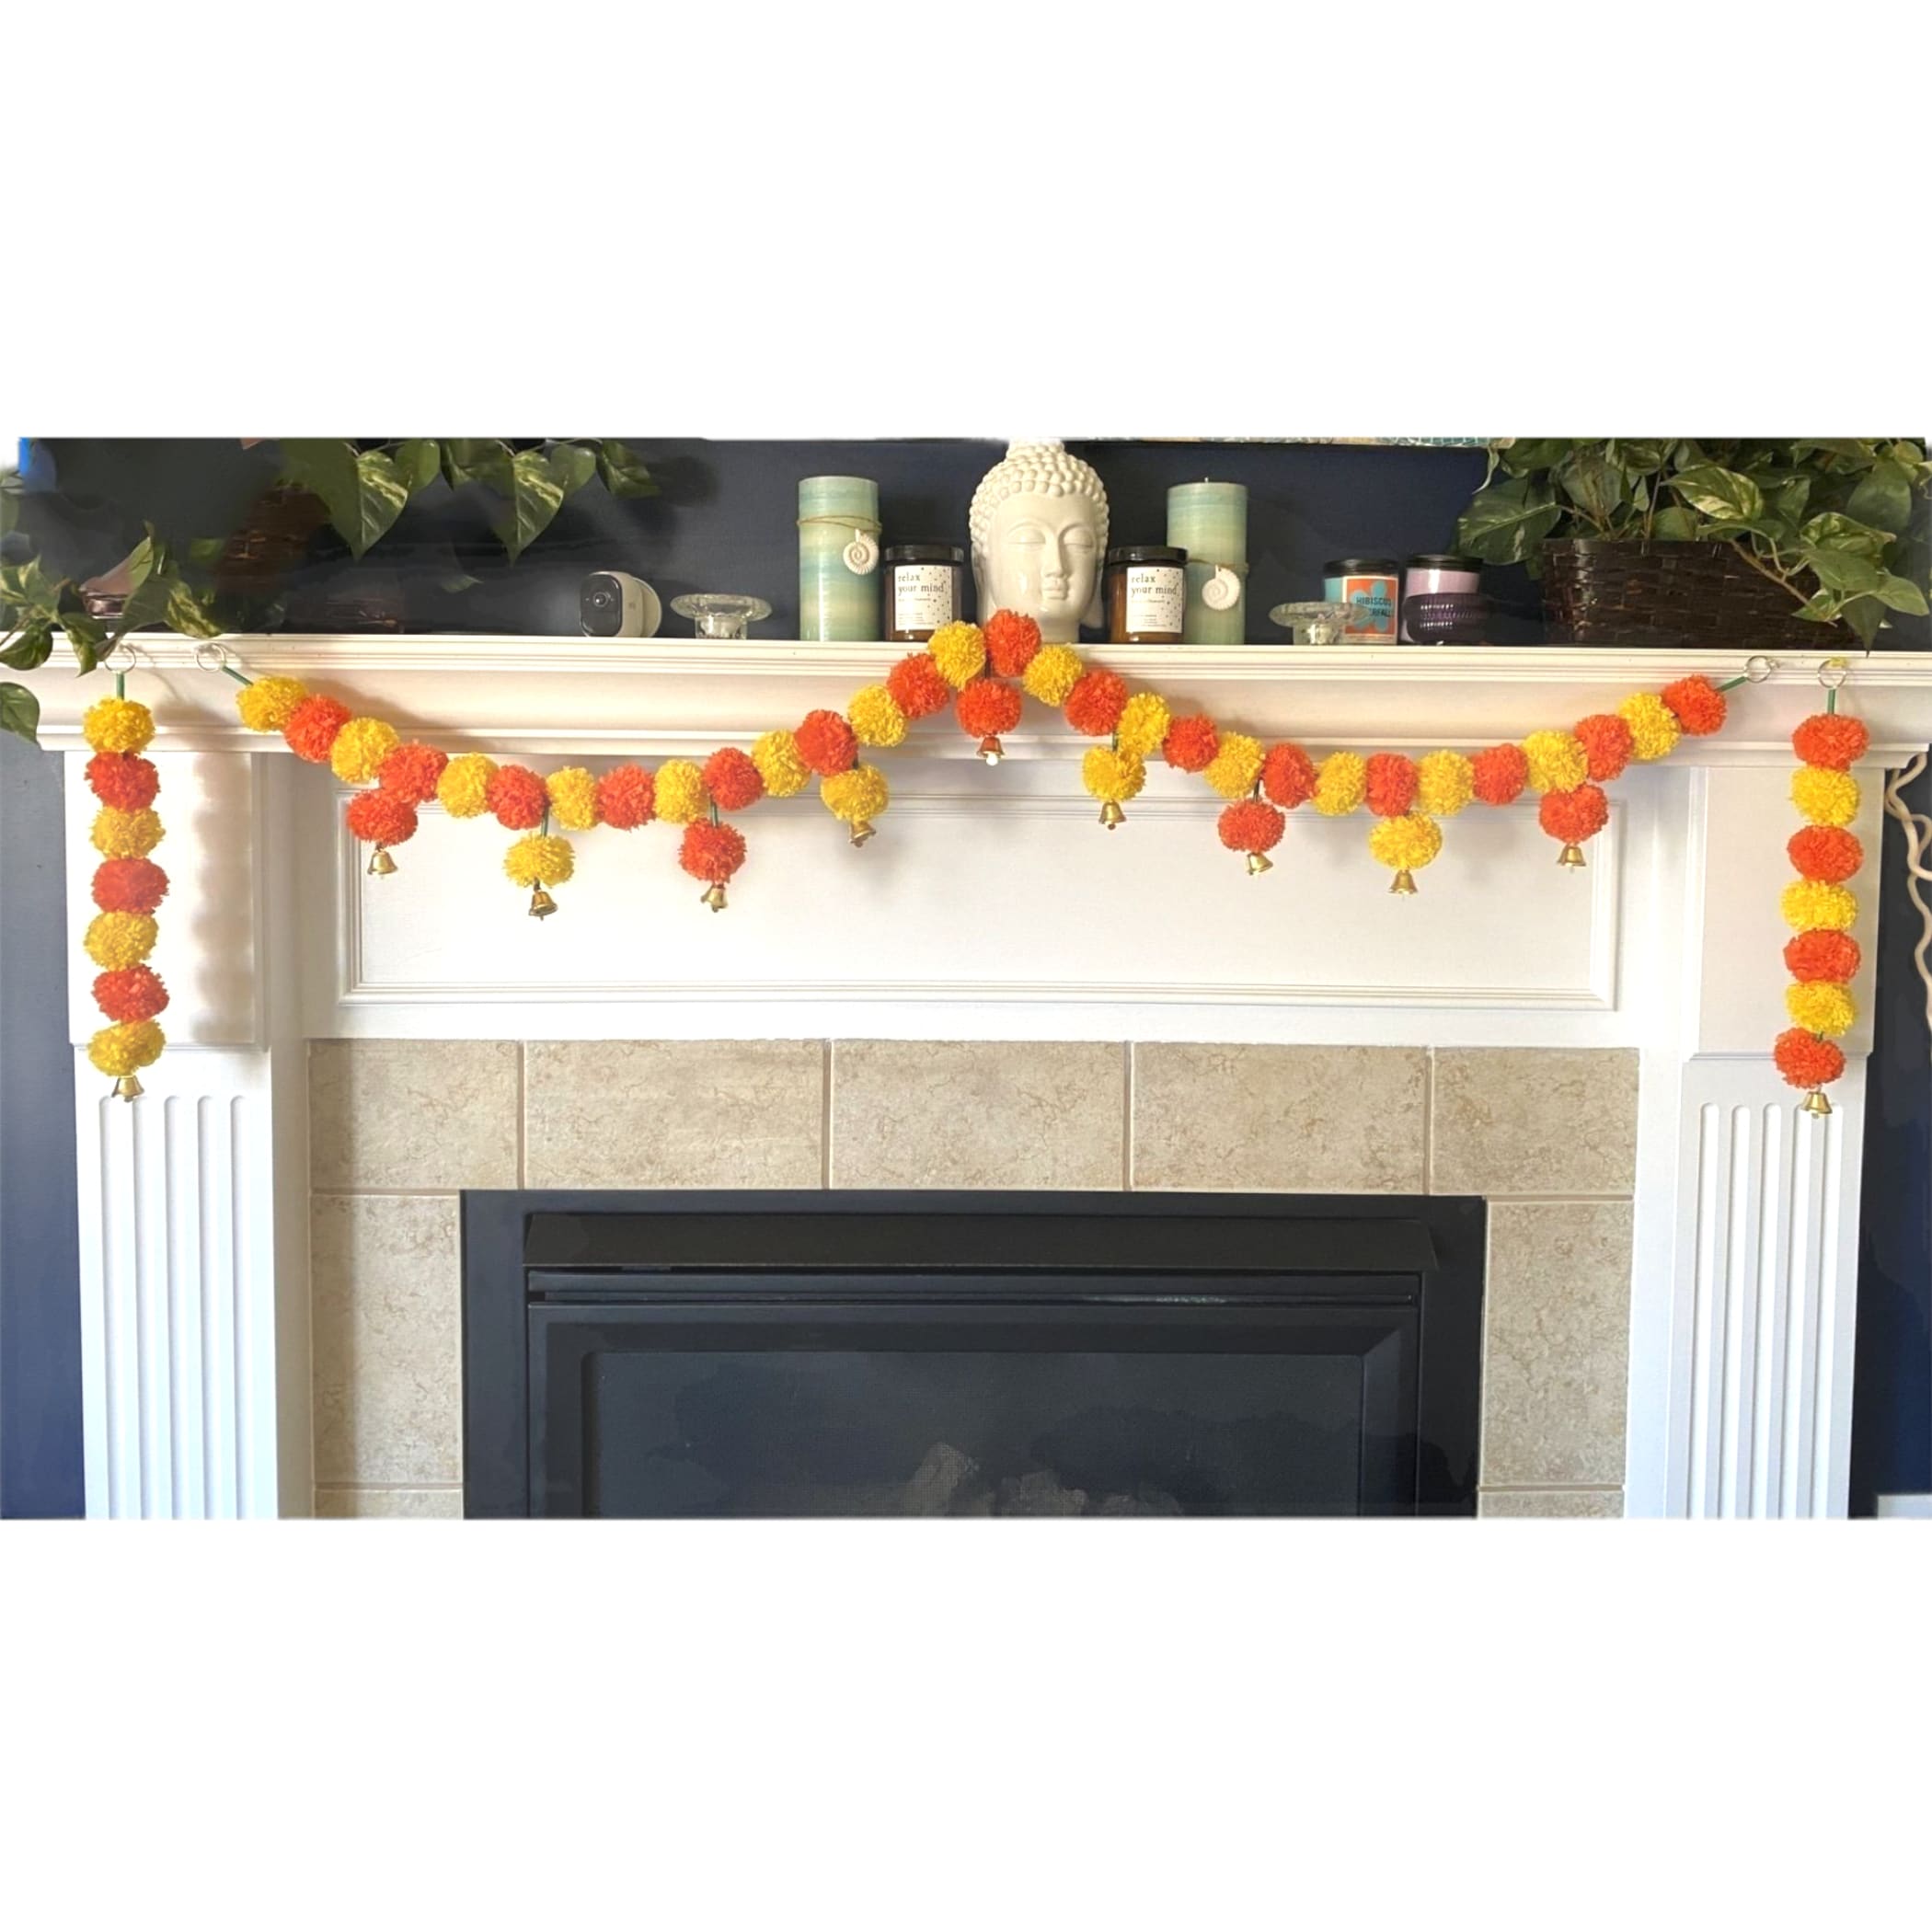 4.5 feet marigold garland toran indian wedding decoration